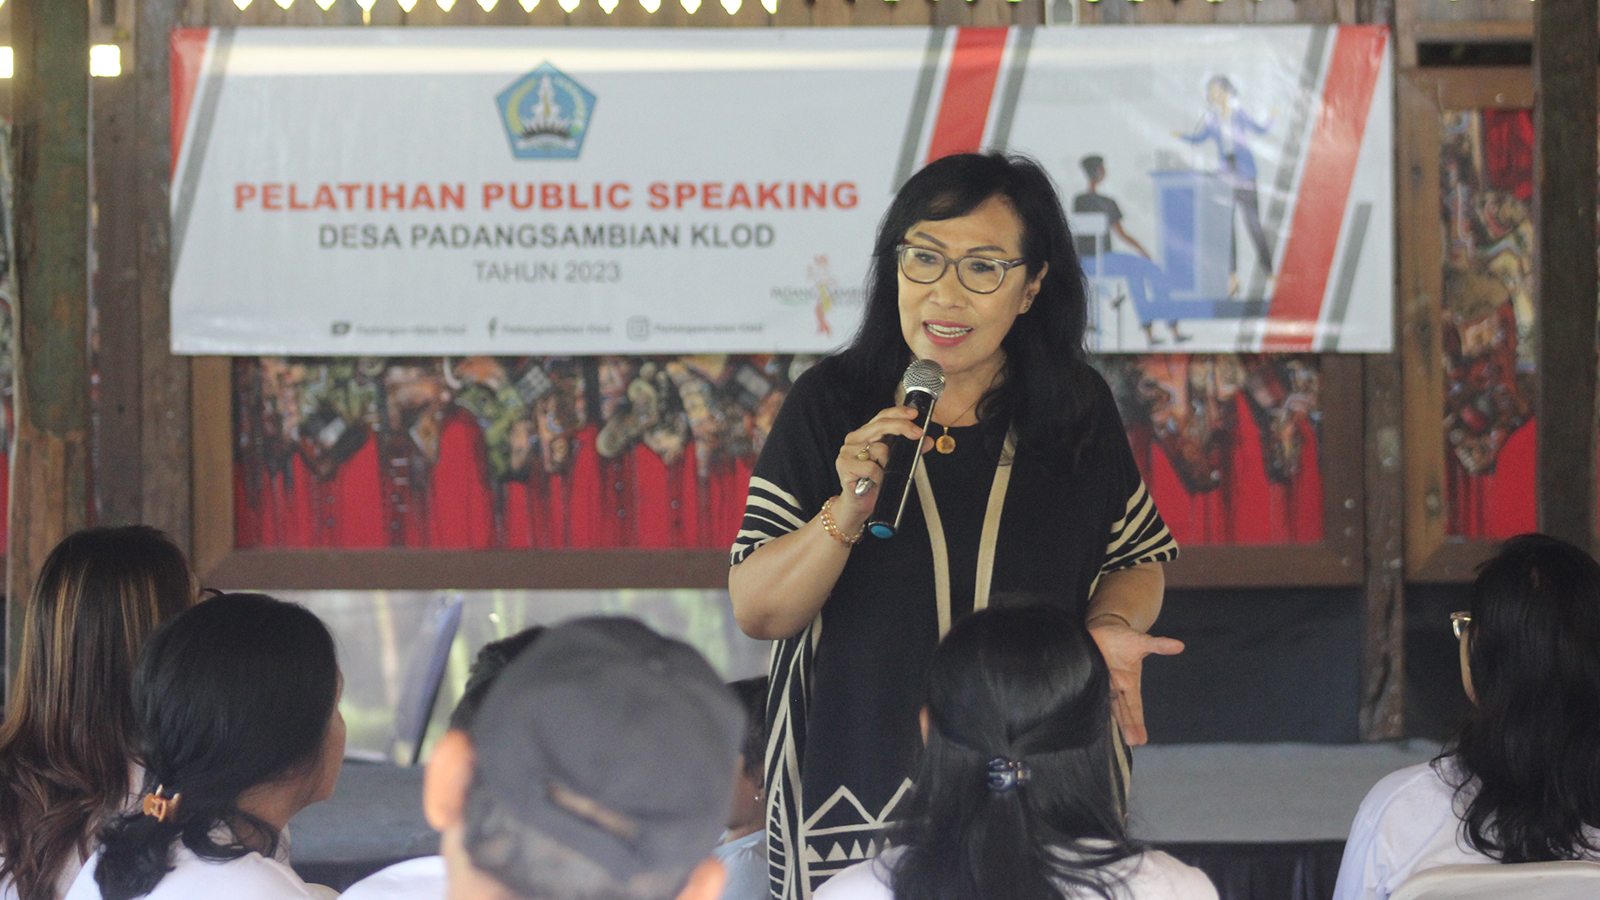 Desa Padang Sambian Kelod, Santy Sastra, Santy Sastra Public Speaking (1)